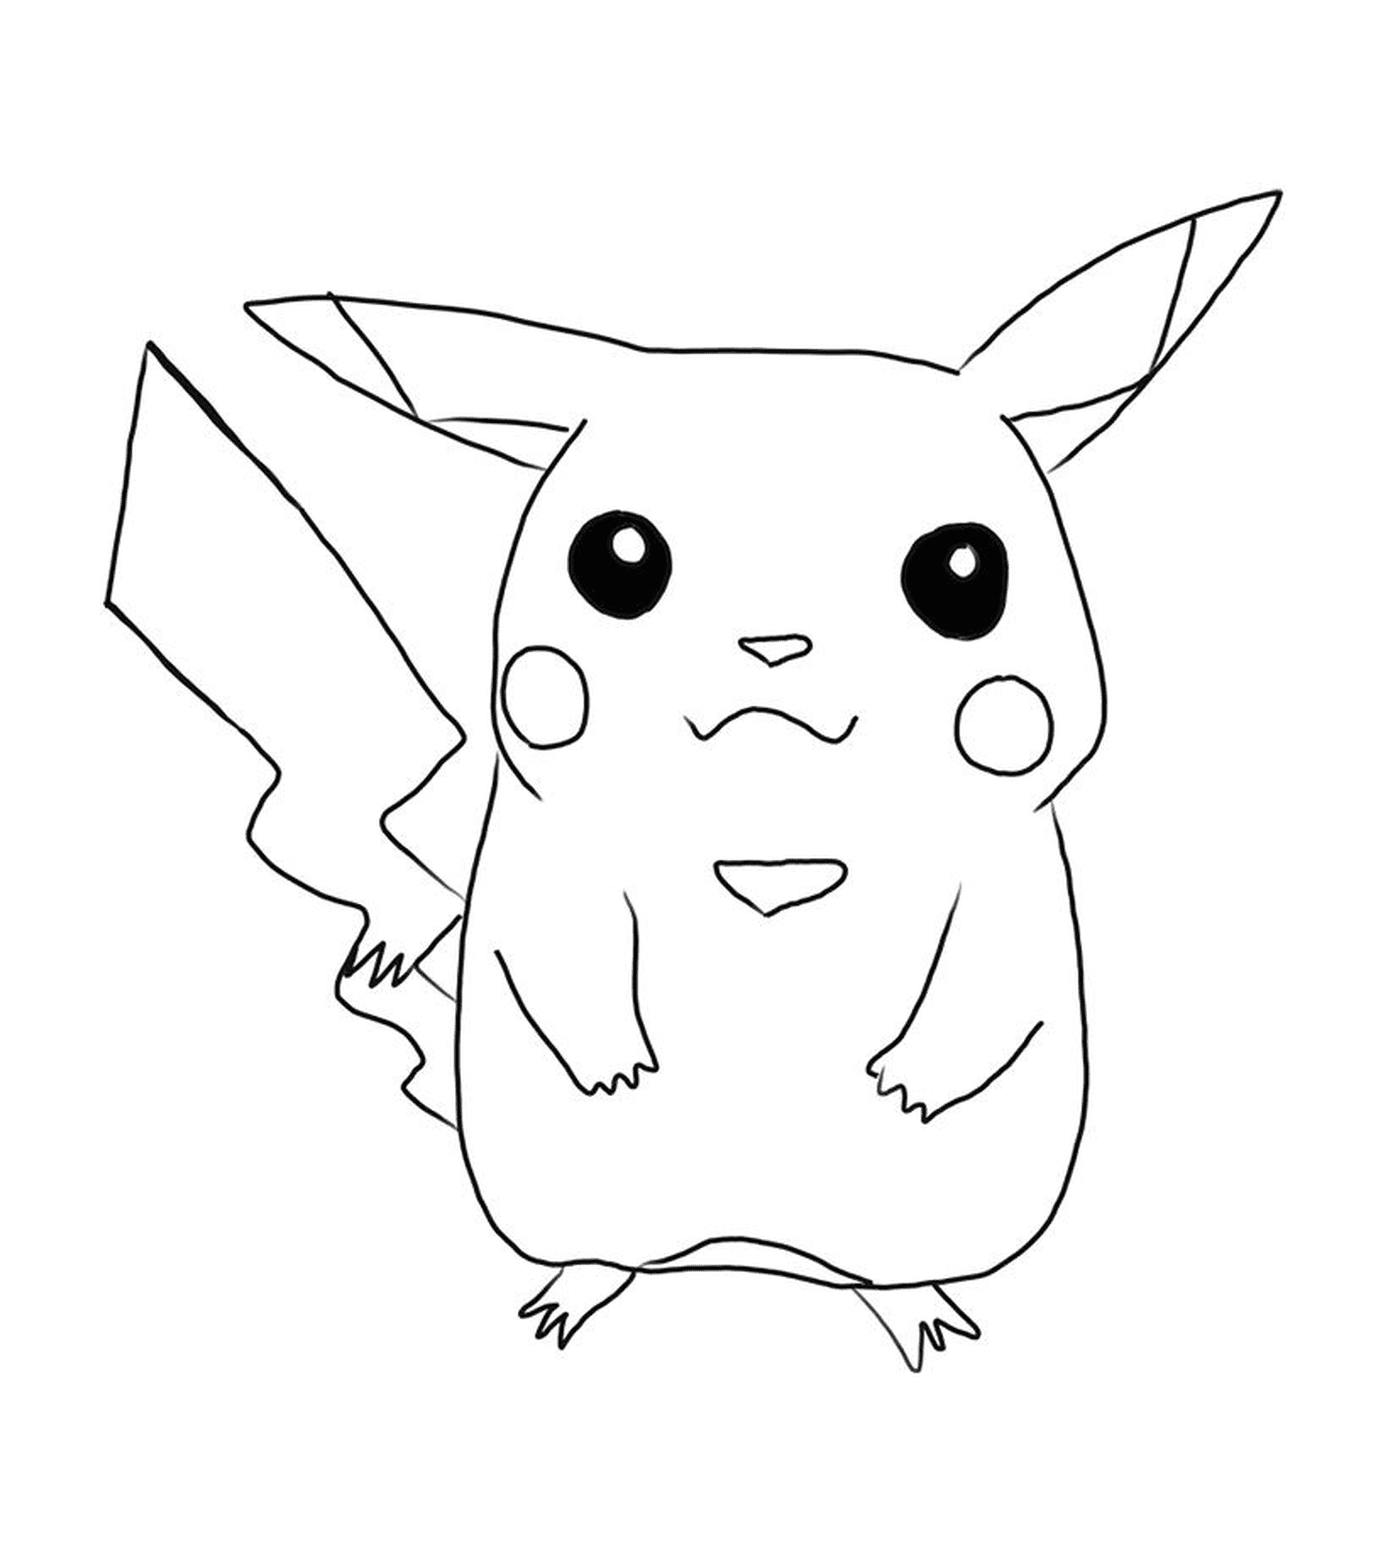  Pikachu, simbolo di adorabilità 